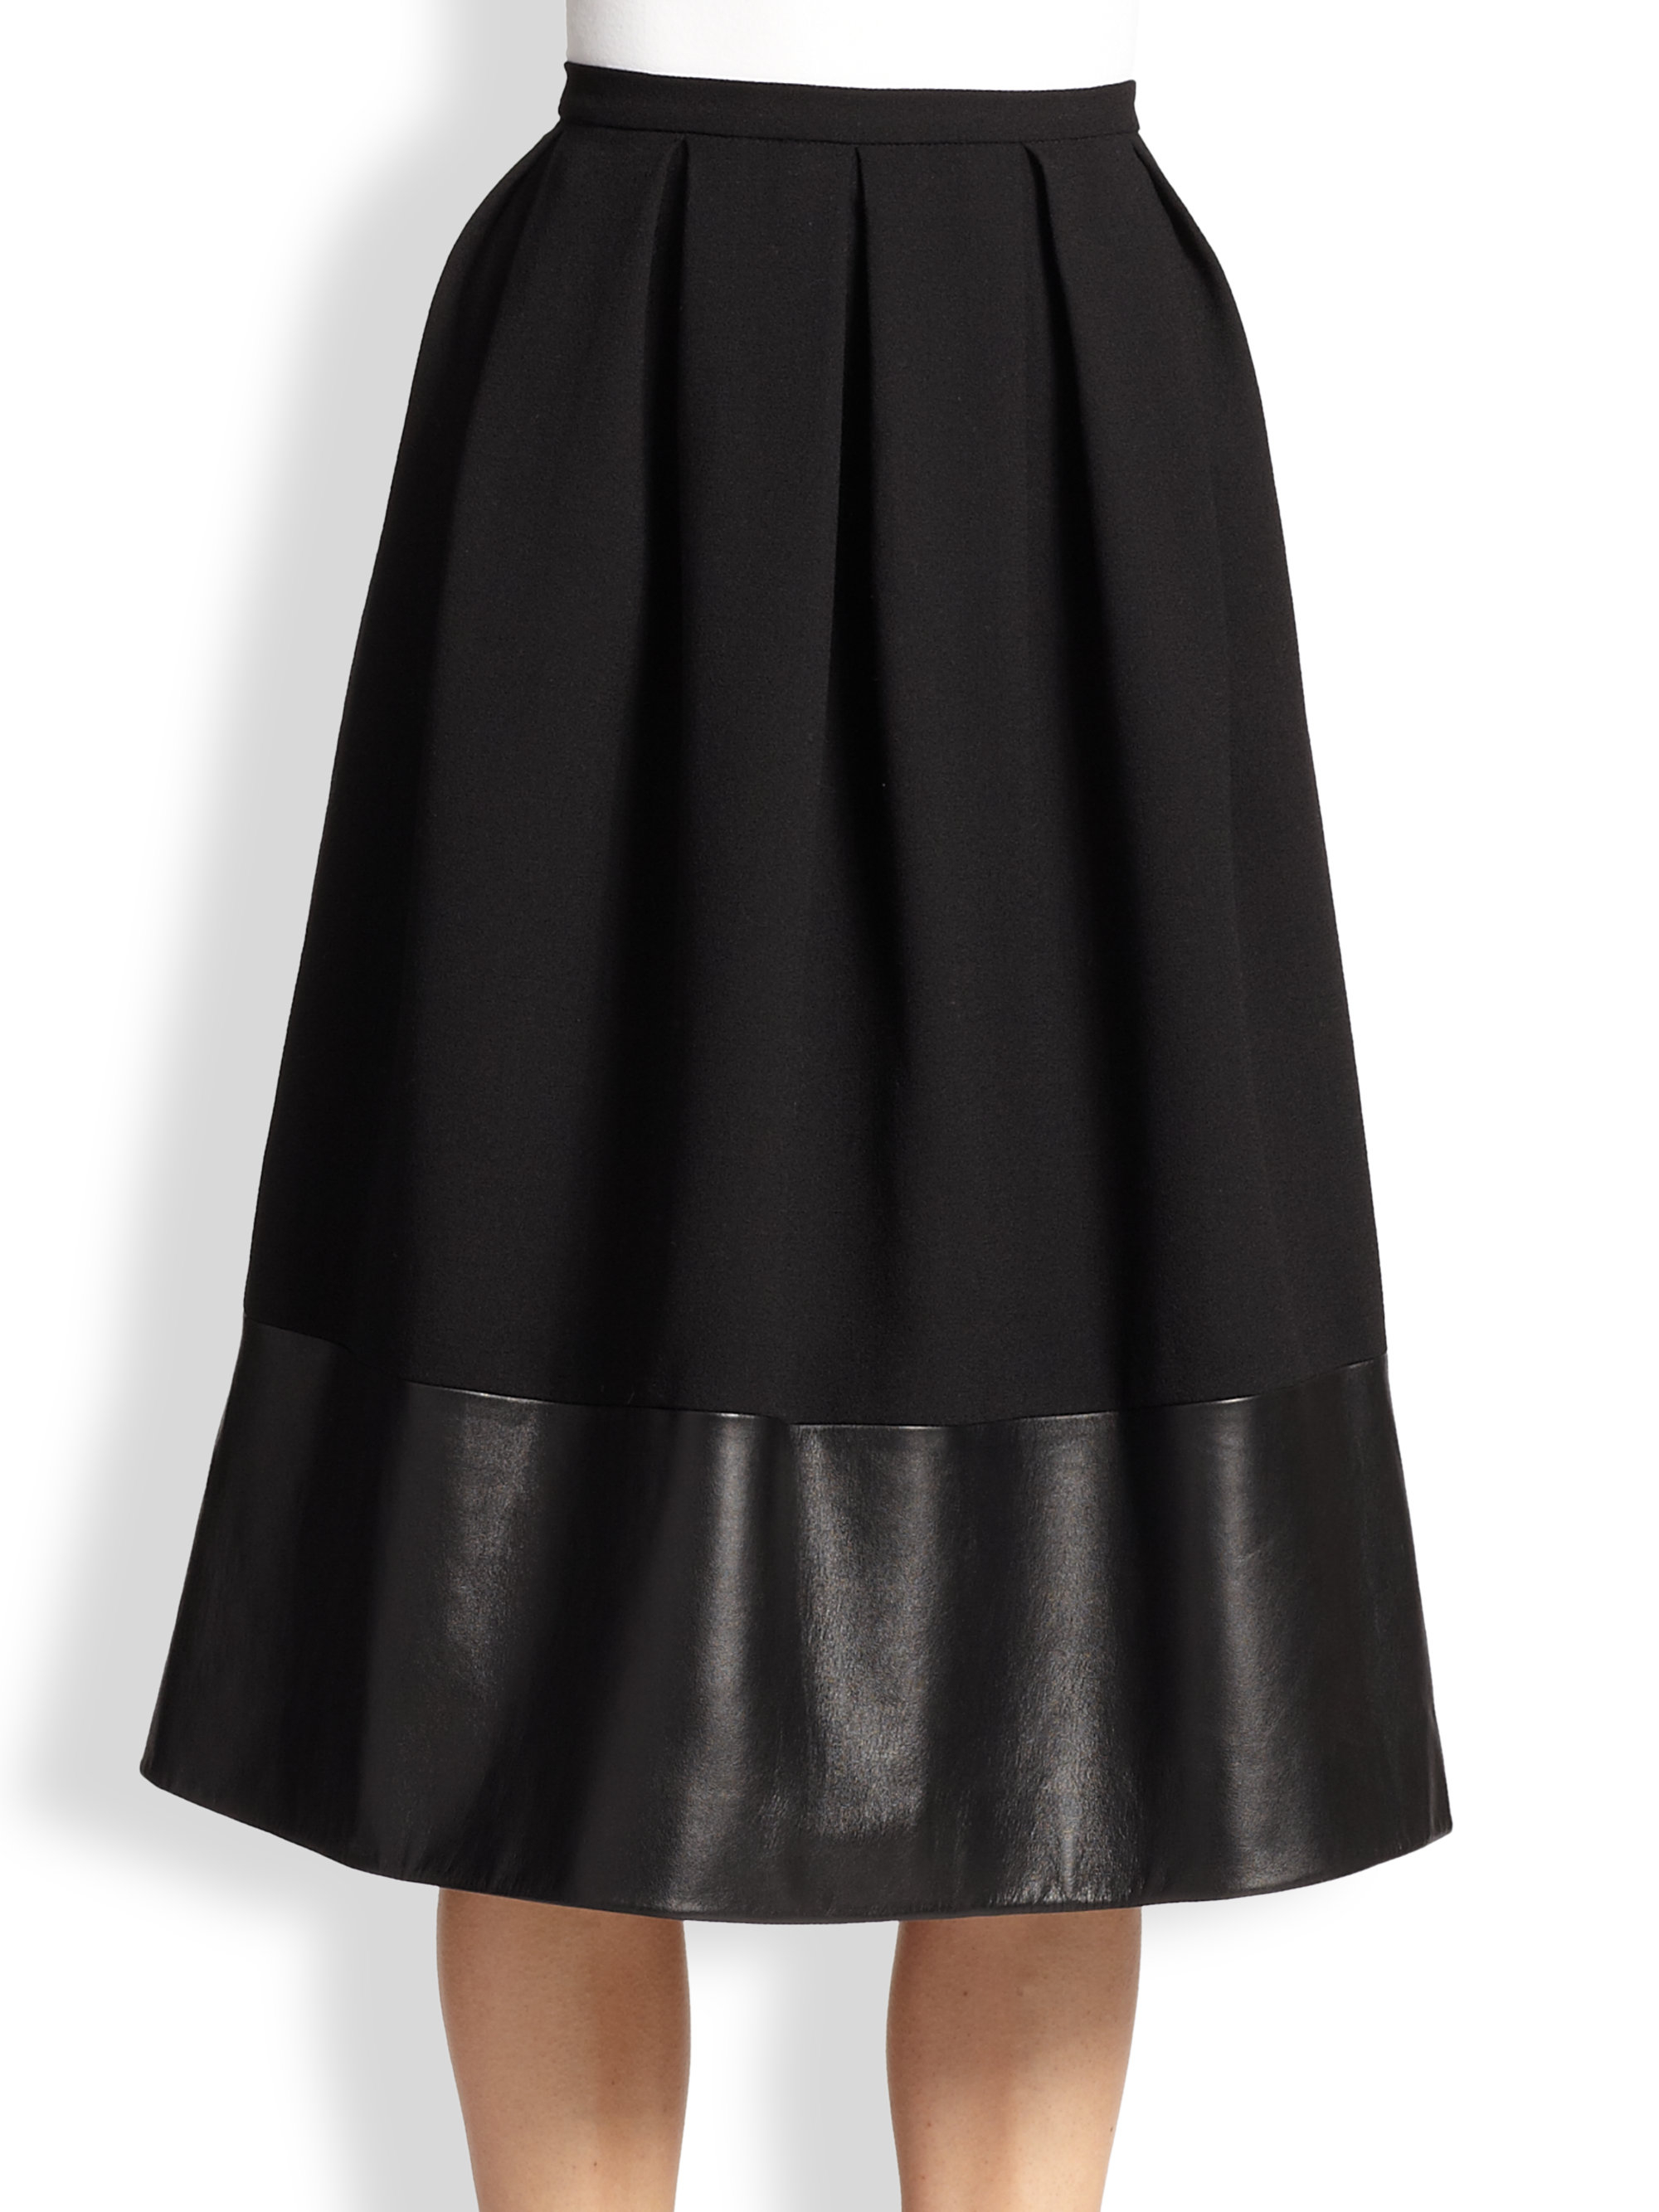 Christopher Kane Wool & Leather Princess Skirt in Black | Lyst